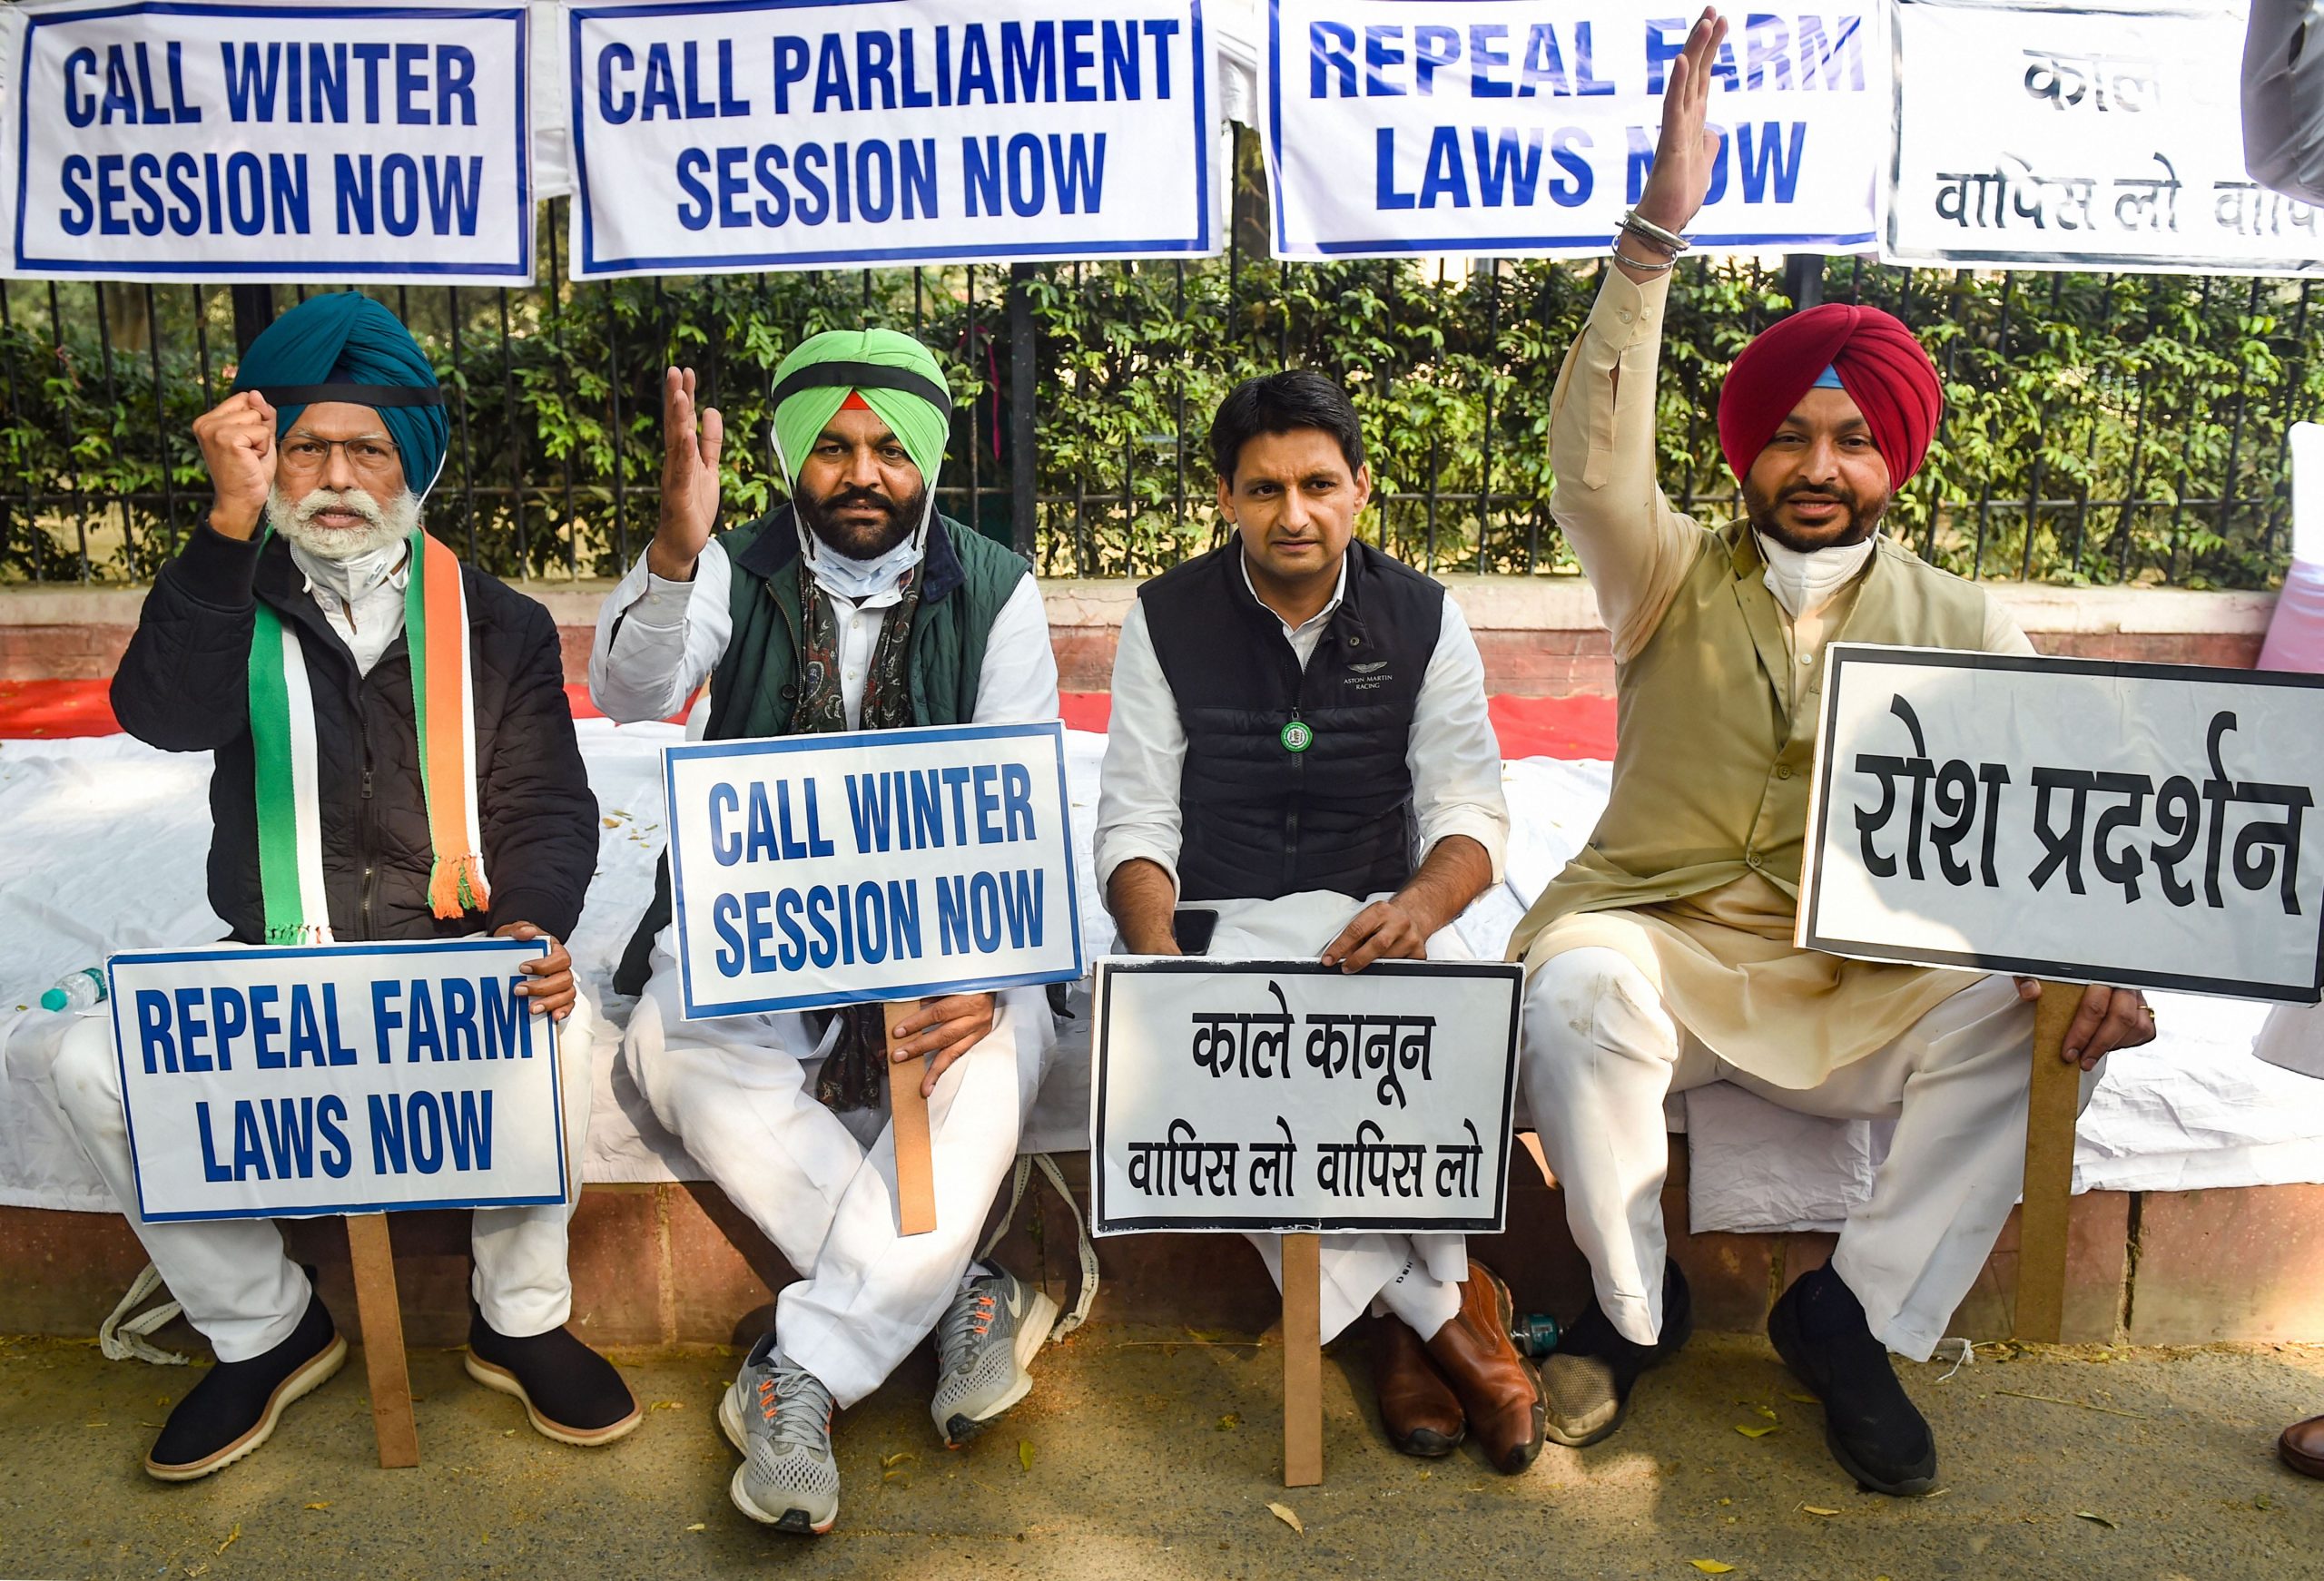 BJP leader Ravi Prasad calls opposition parties’ stand against farm laws shameful double standards